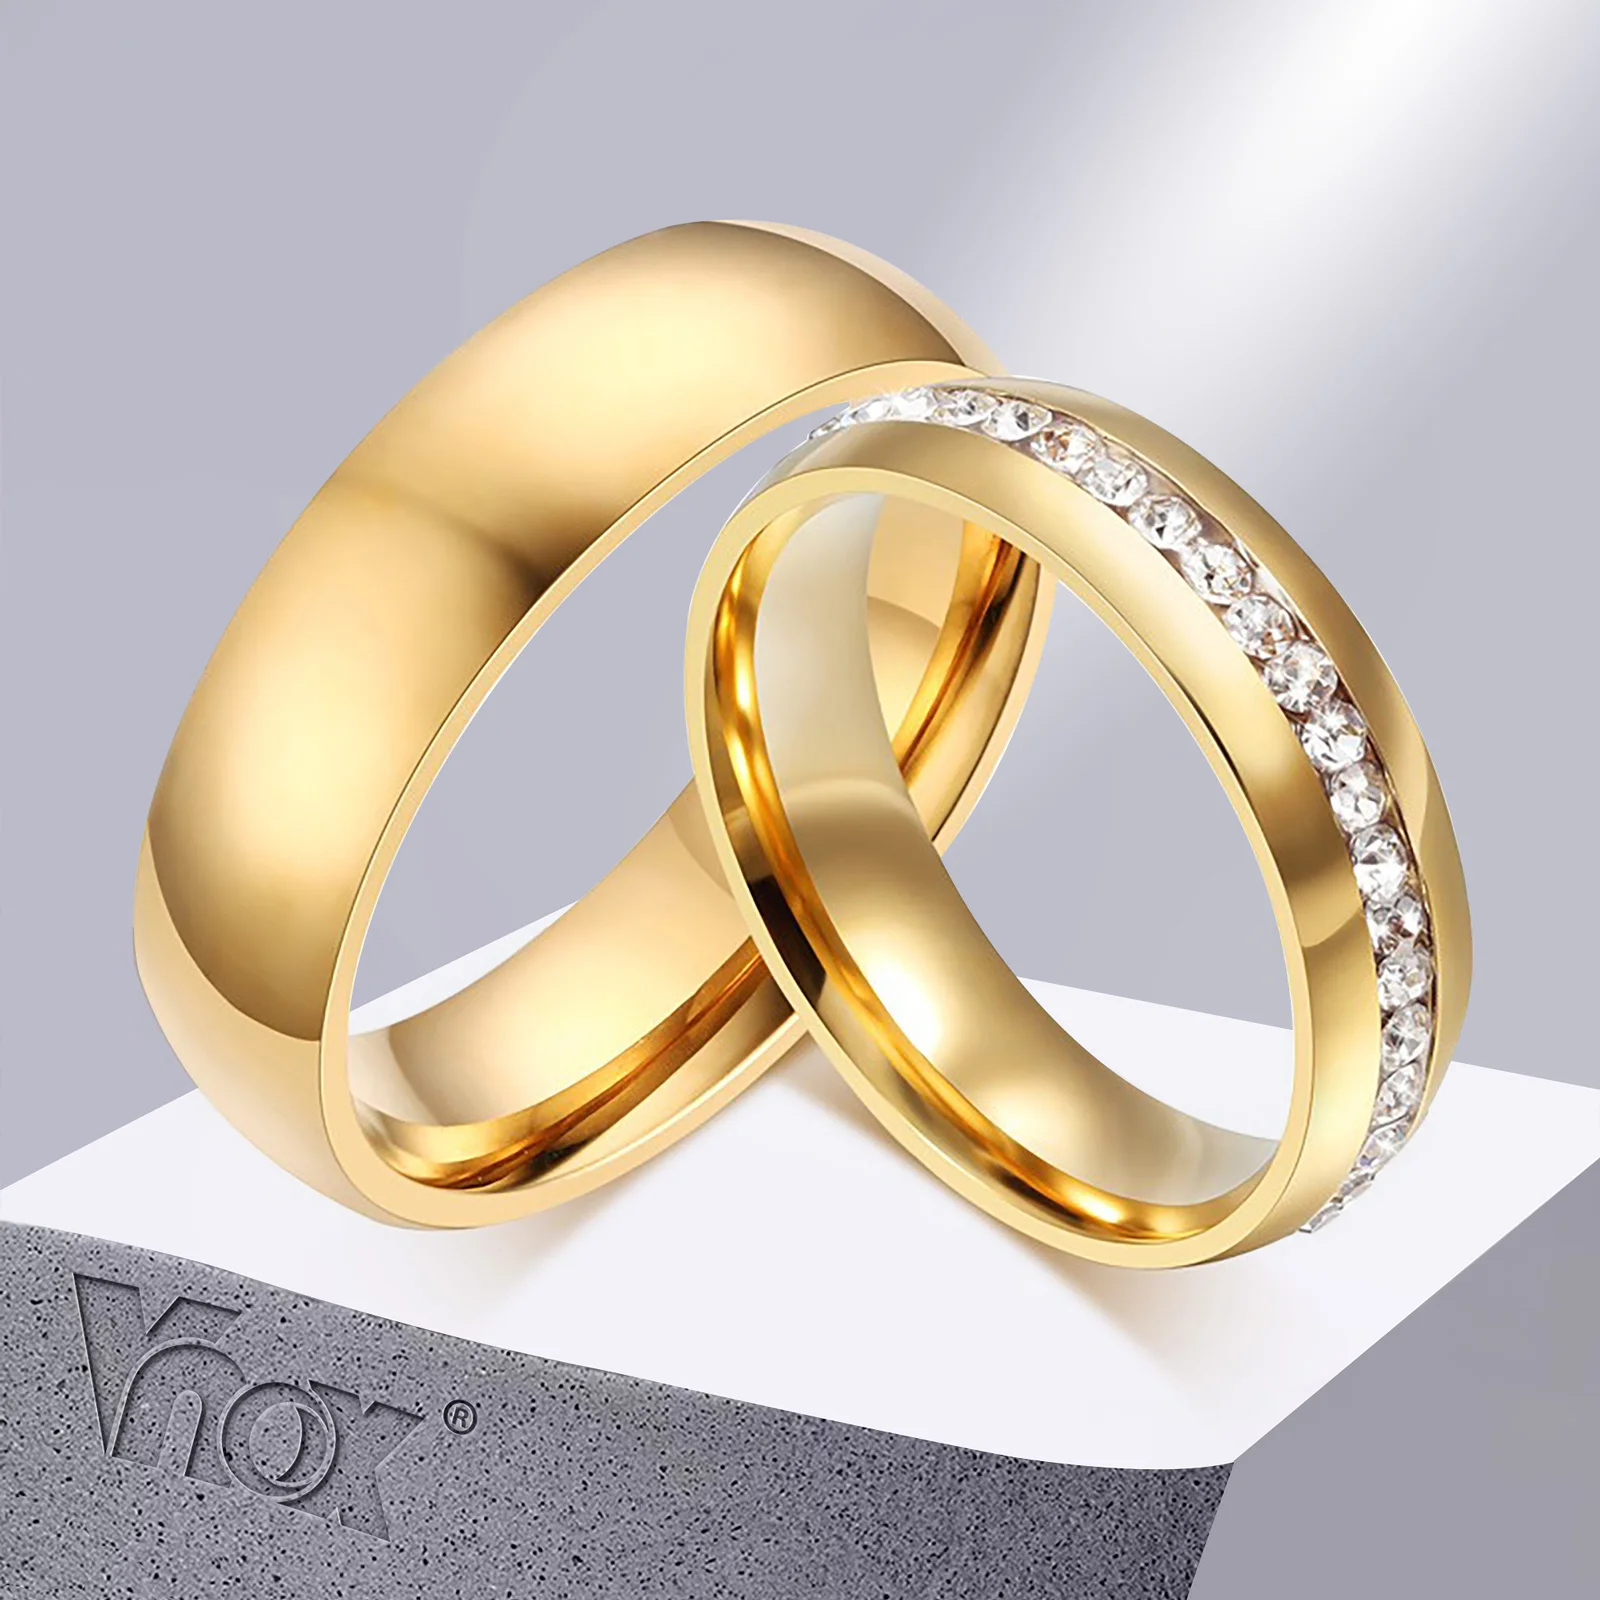 VNOX Mens Womens 8MM Stainless Steel Triple Moon Goddess Rings for Egagement Wedding Band,3 Color 